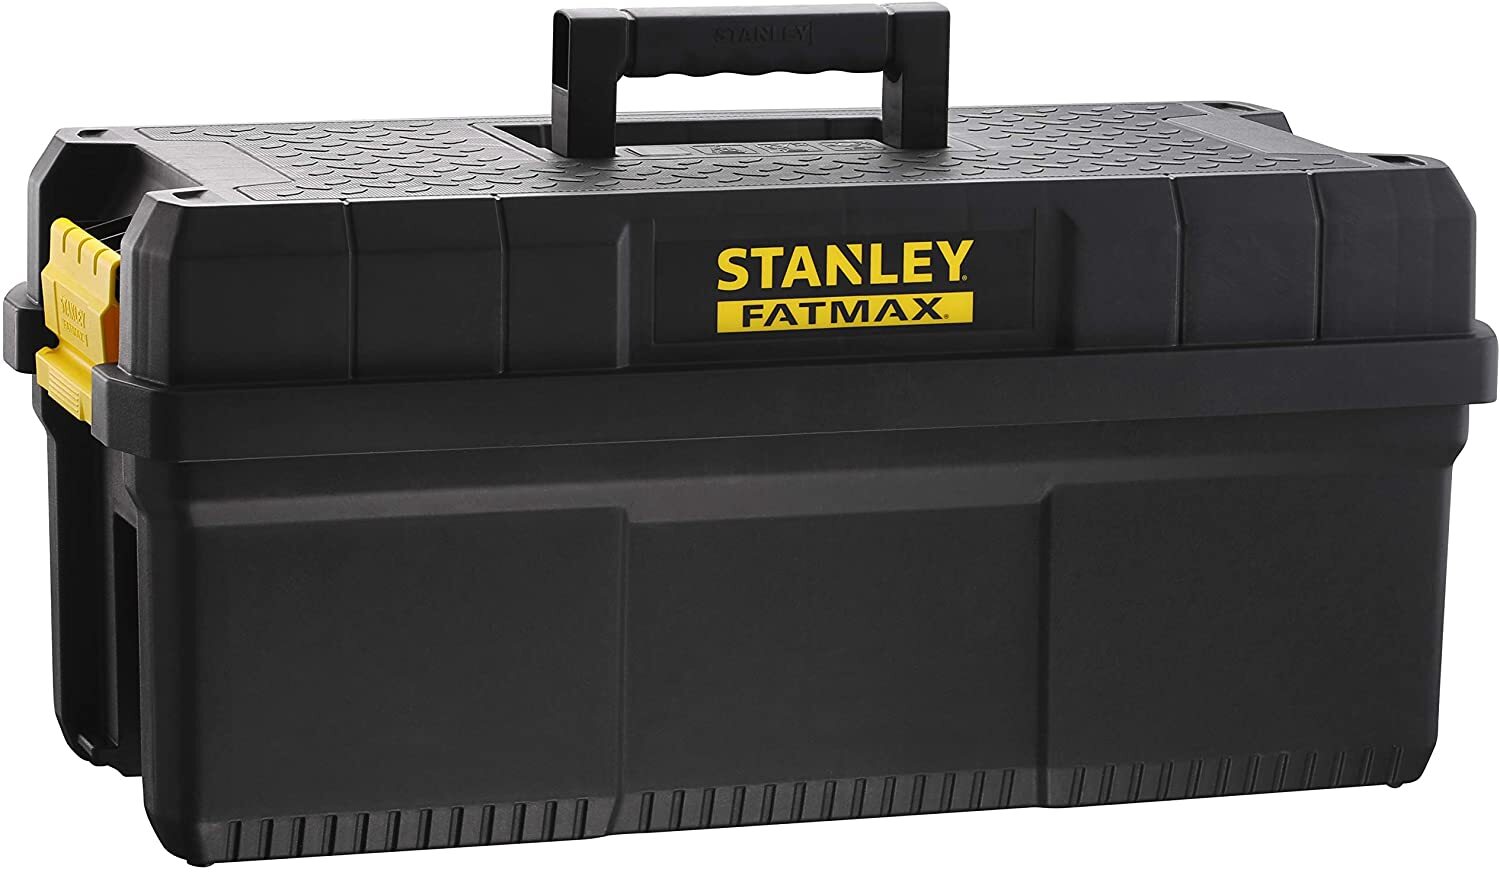 Toolbox 64. Ящик-тележка Stanley stst1-80150 Essential Chest 64.5x34.5x40 см. Ящик-органайзер Stanley FATMAX. Ящик Stanley 1-95-620 66.2x29.3x22.2 см 26''. Ящик Stanley 1-95-830 54.5x33.5x28 см 20''.